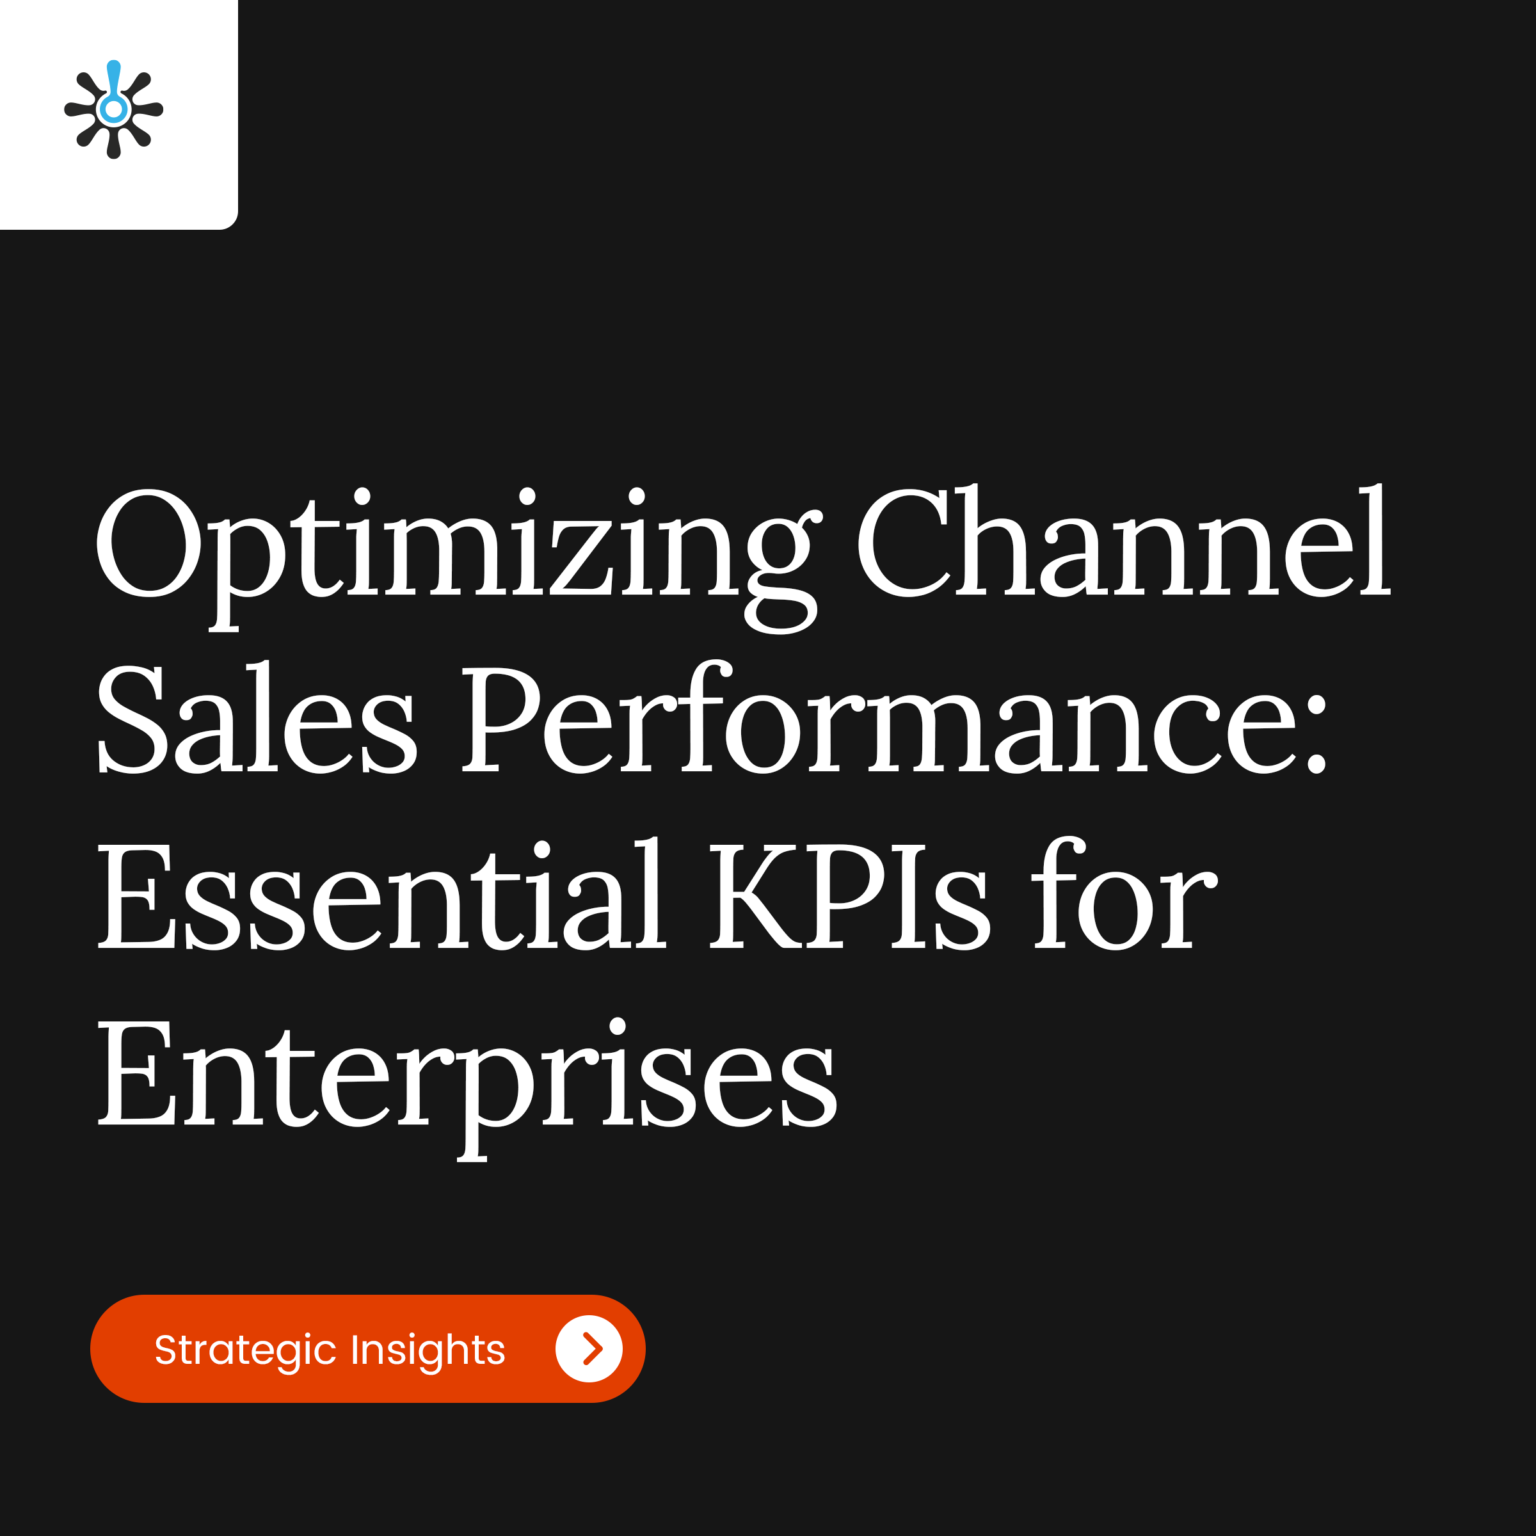 Title Page Reading "Optimizing Channel Sales Performance: Essential KPIs for Enterprises"